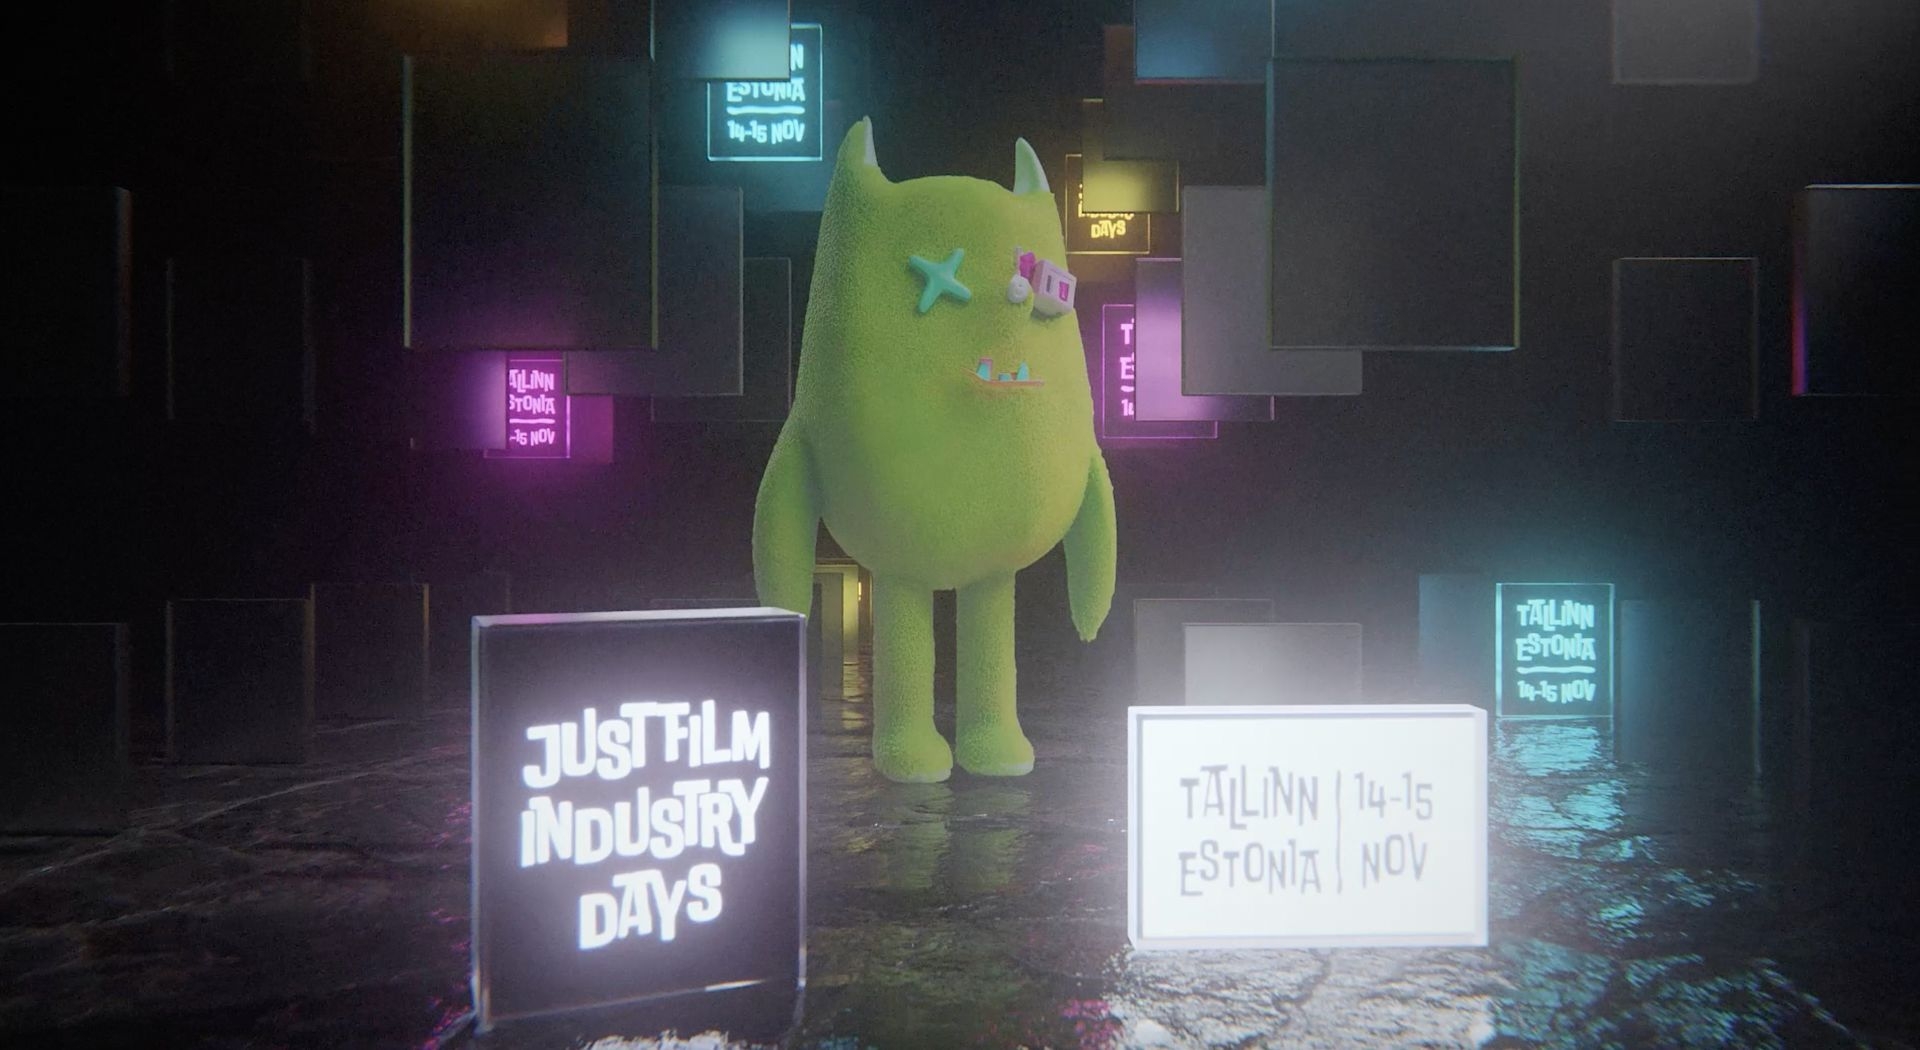 justfilm_industry_days